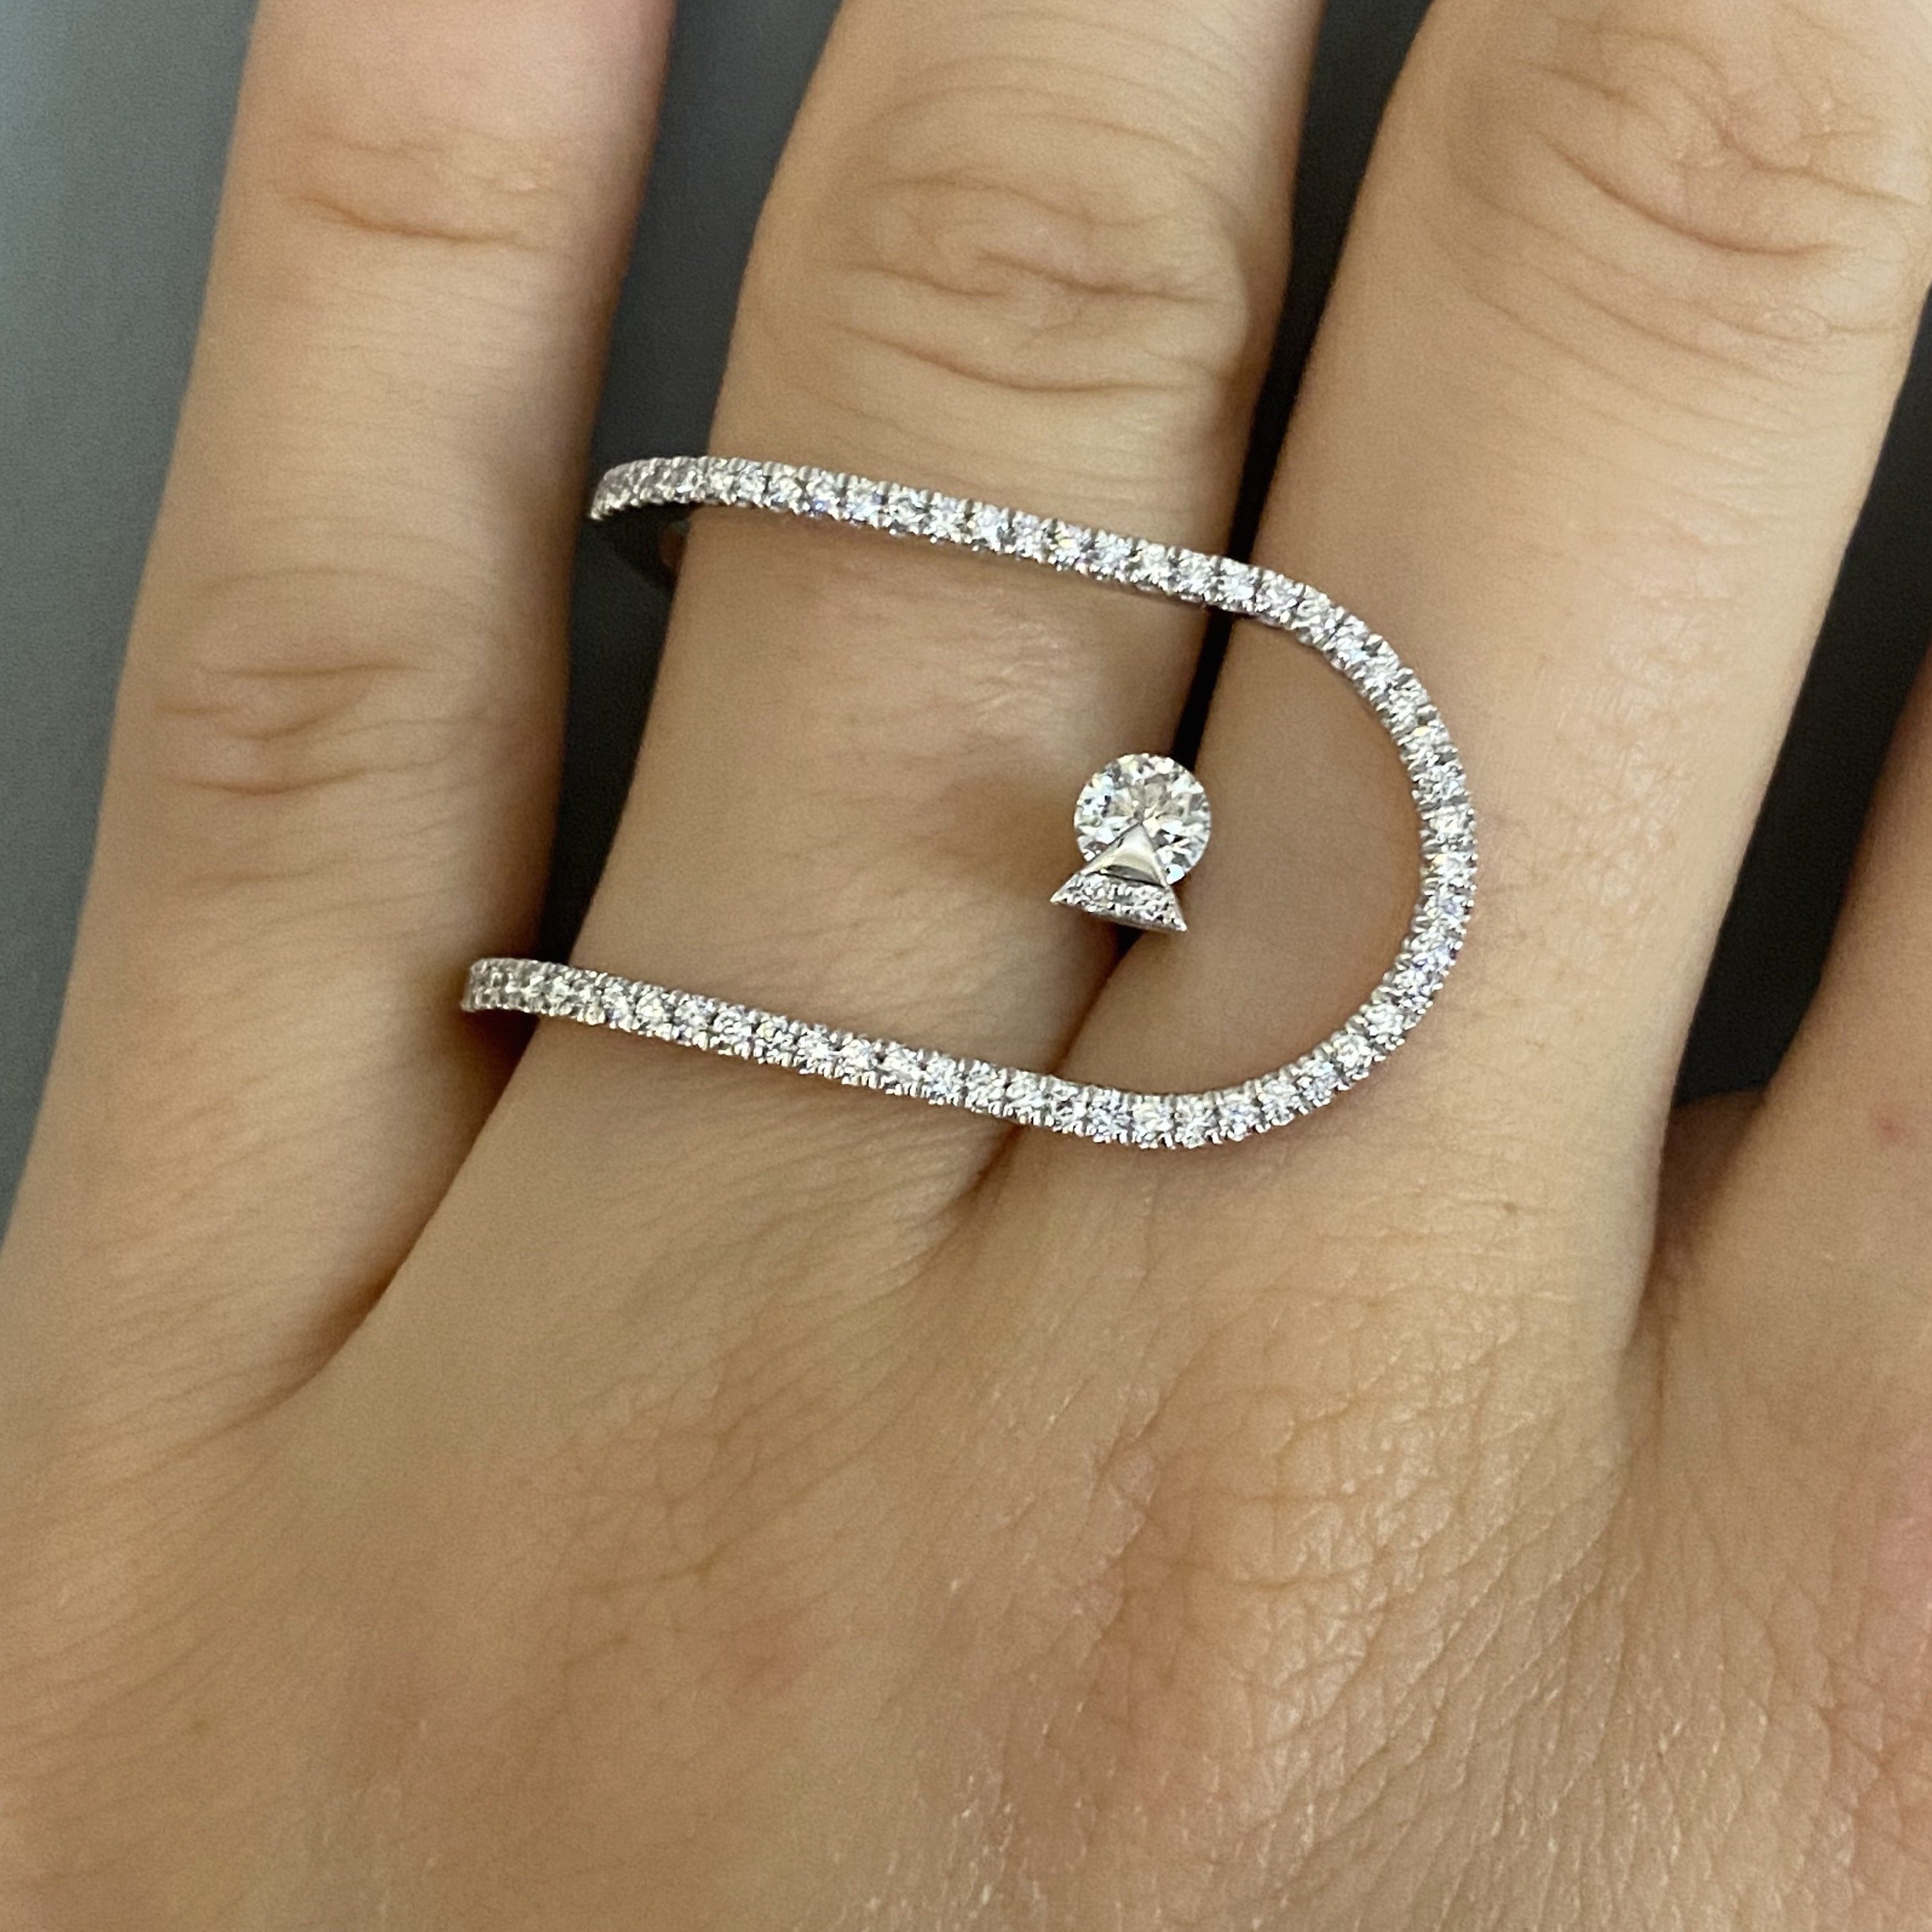 Richard Ring - Vidar Jewelry - Unique Custom Engagement And Wedding Rings